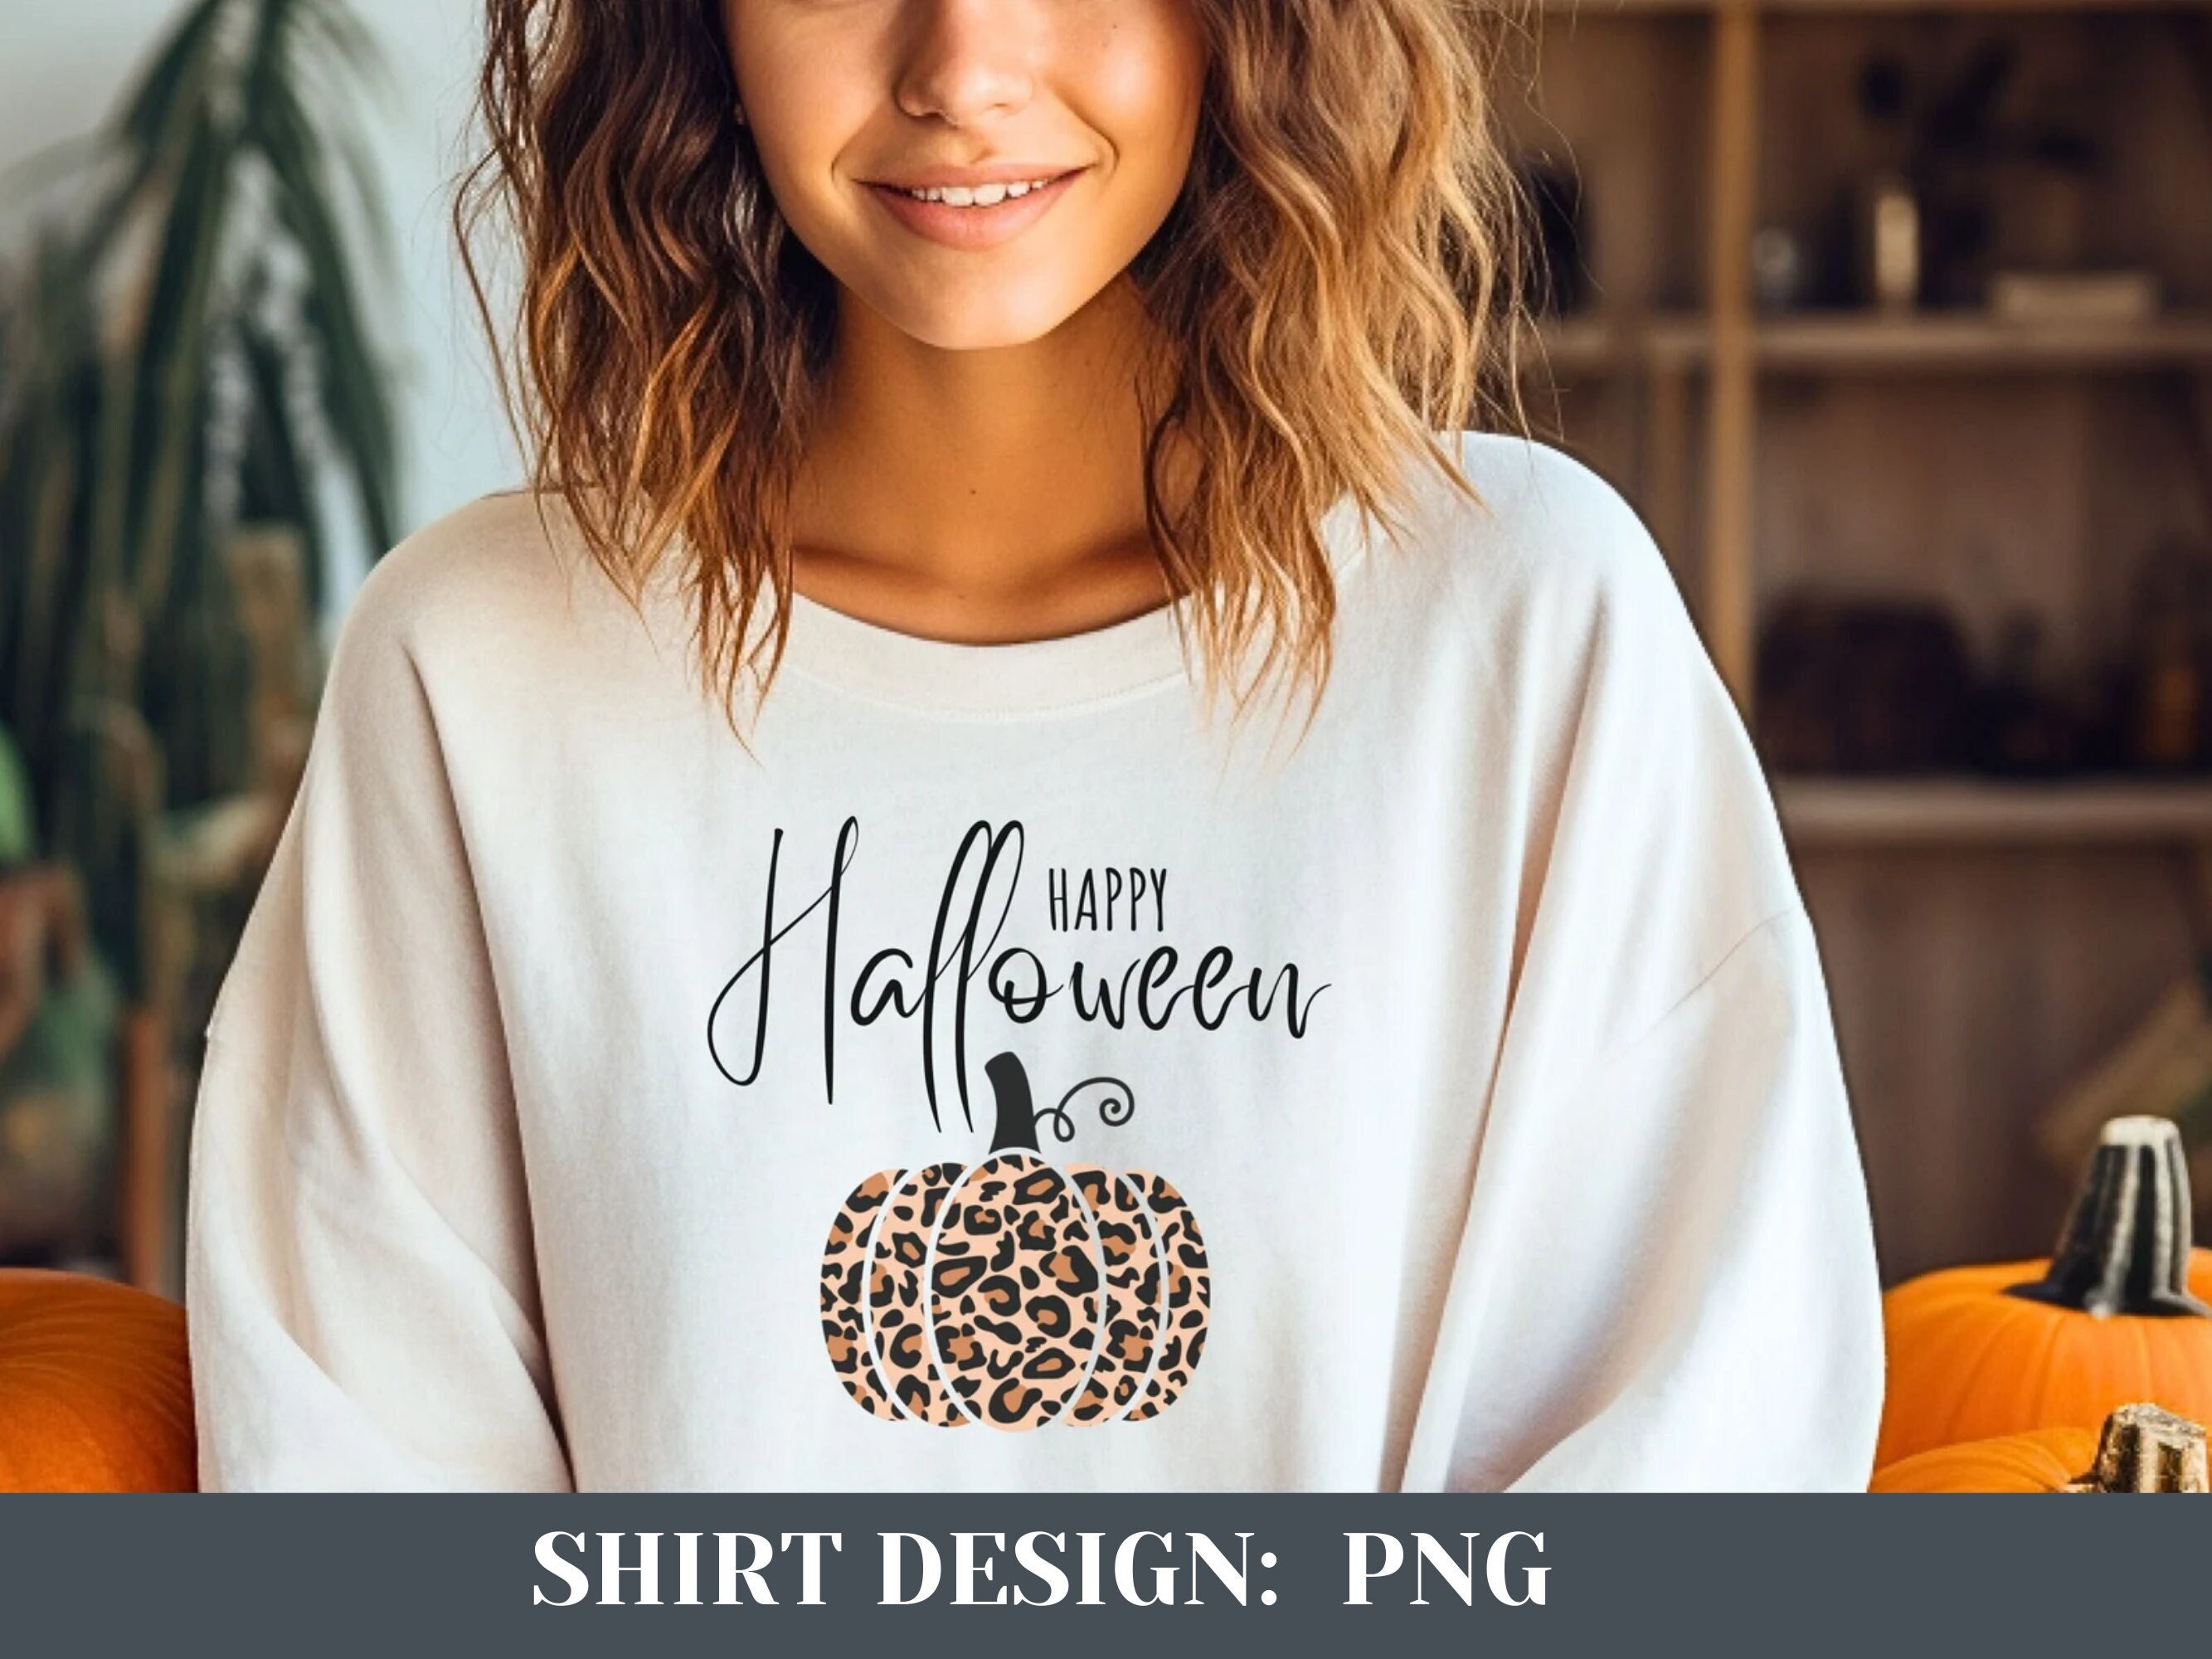 Louis Vuitton Pumpkin Halloween brown Shirt, Hoodie - LIMITED EDITION